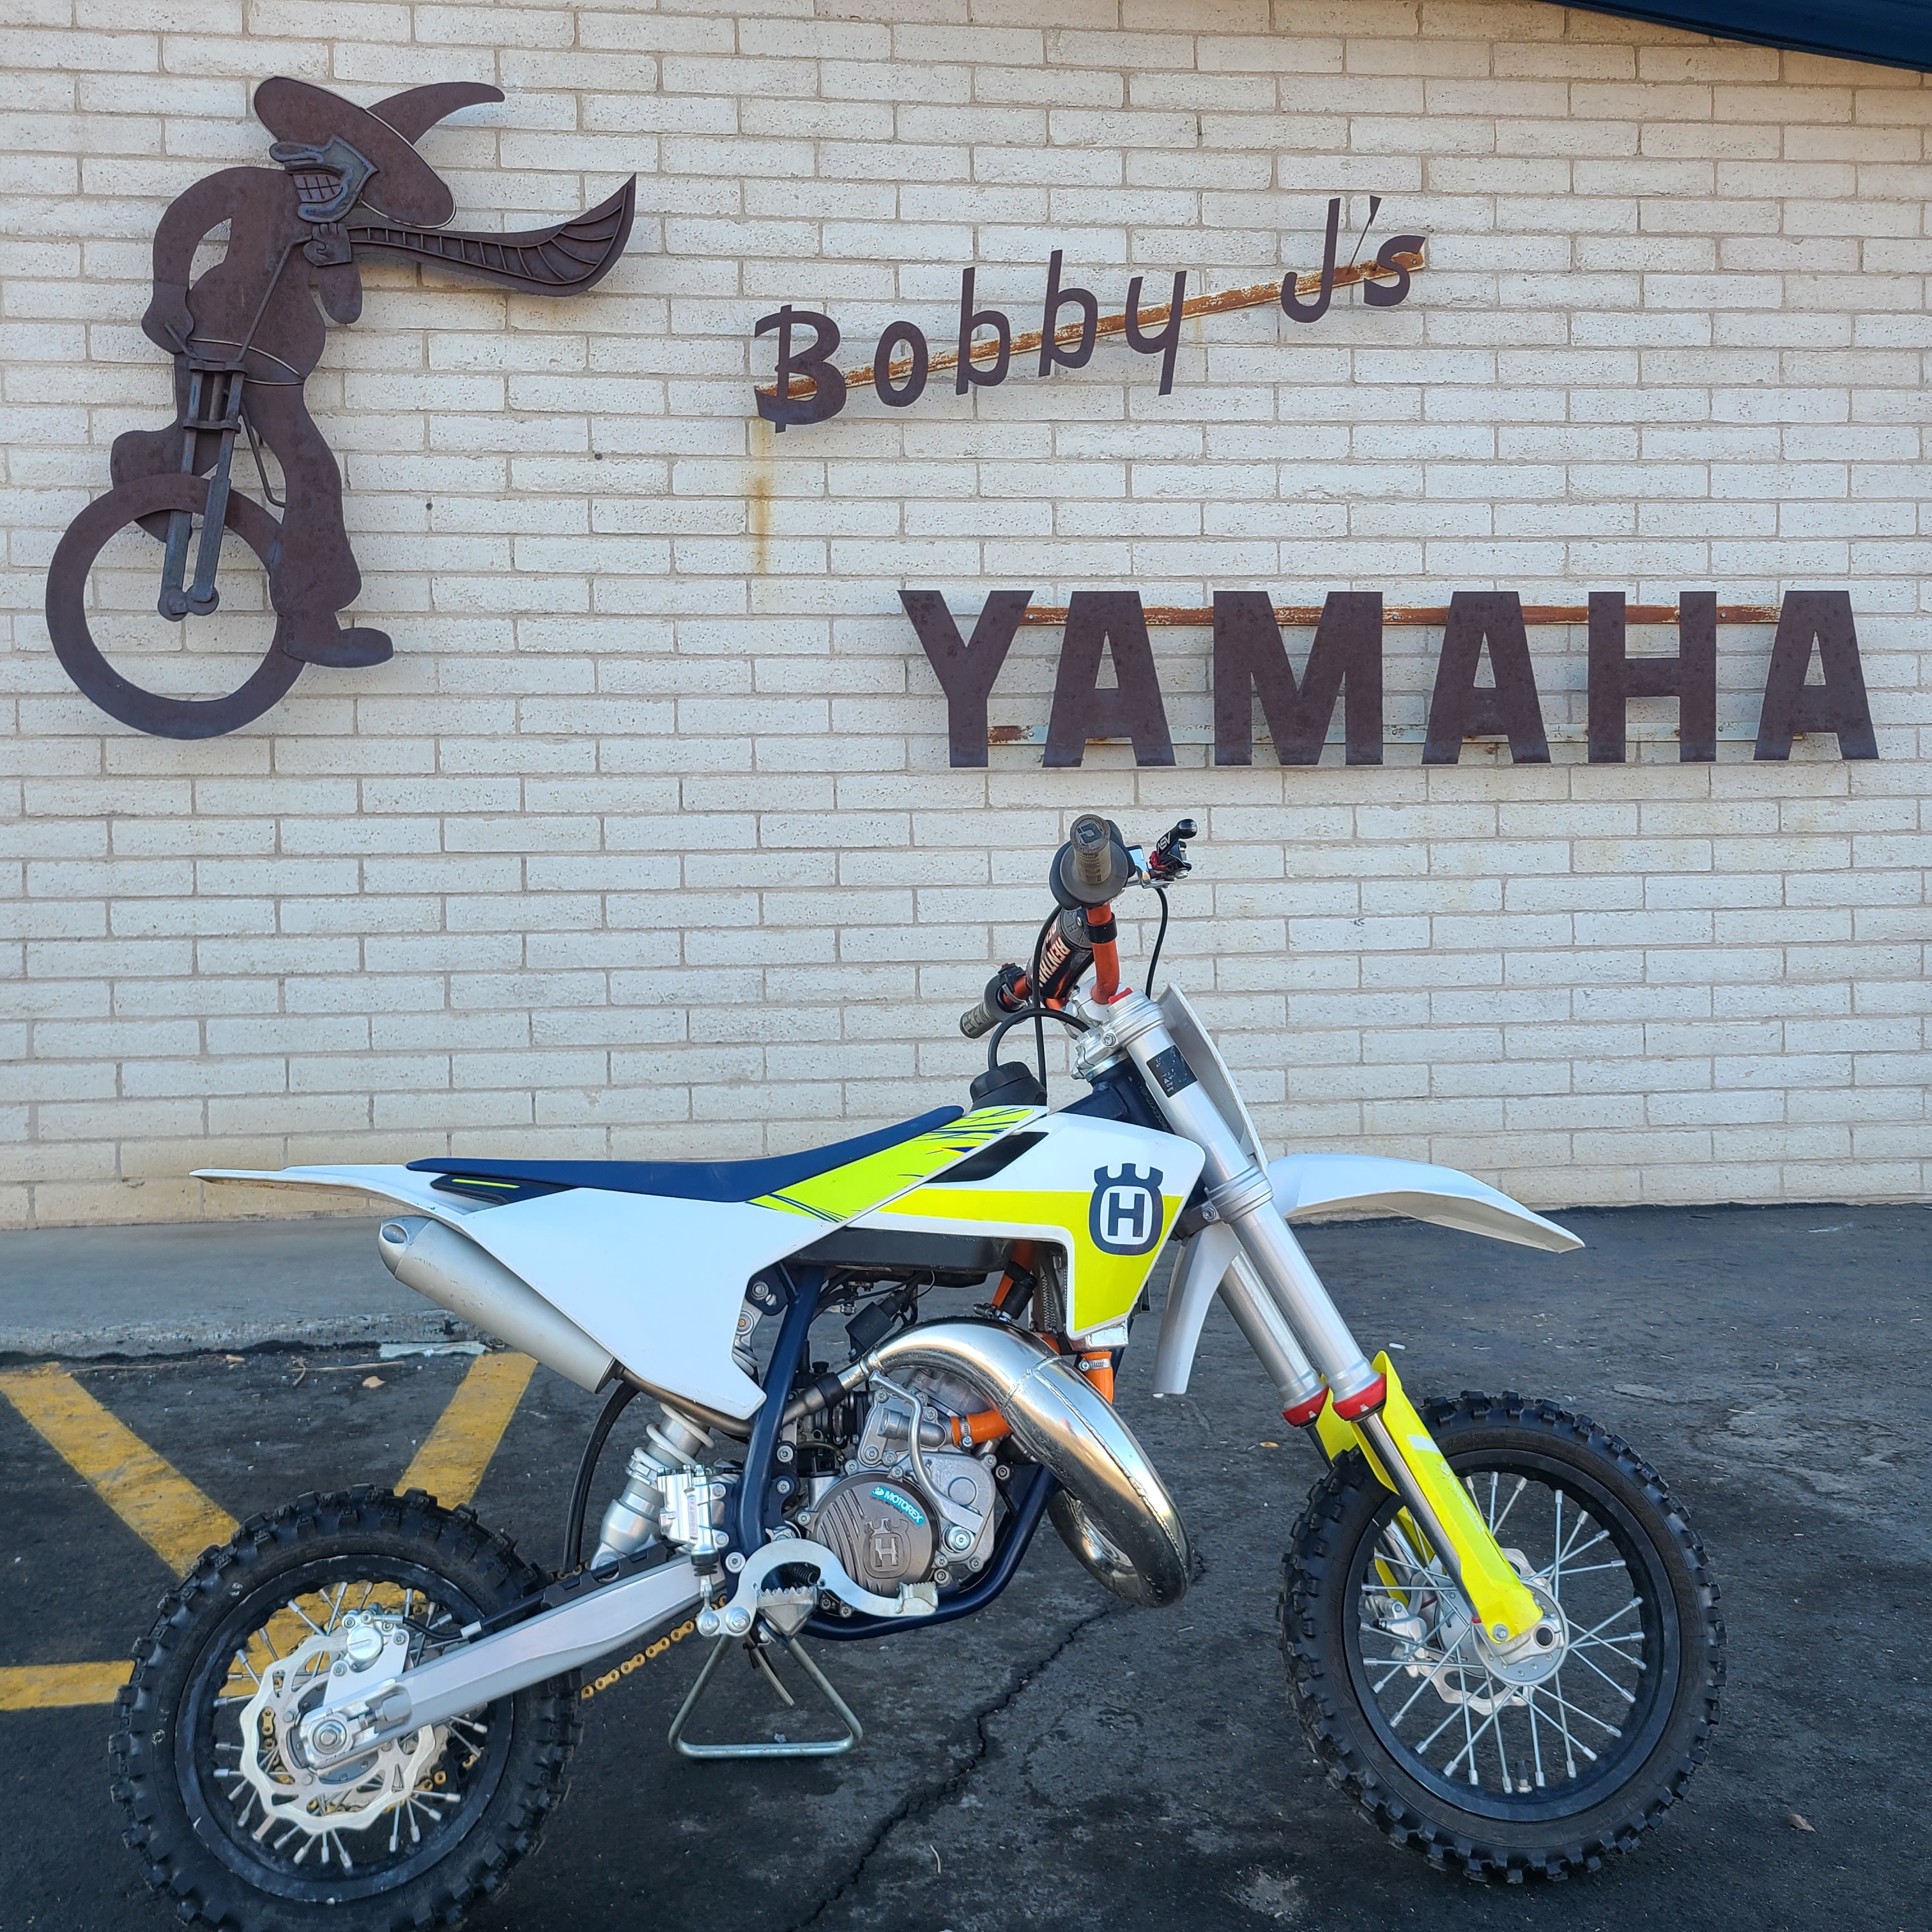 2021 Husqvarna TC 50 at Bobby J's Yamaha, Albuquerque, NM 87110